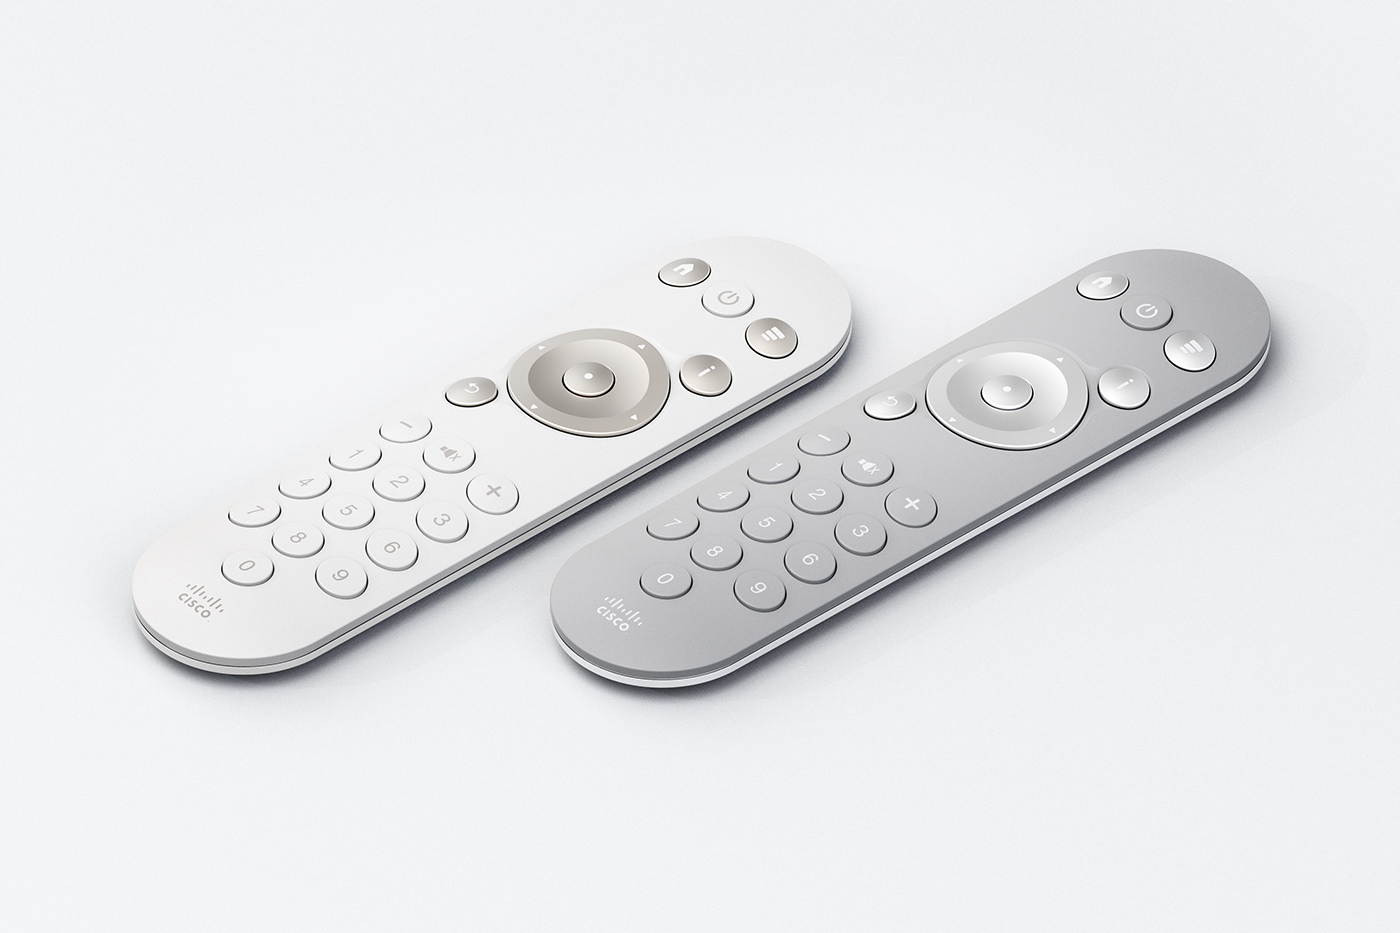 cisco remote Danish Design eskild hansen design Minimalism Remote Control